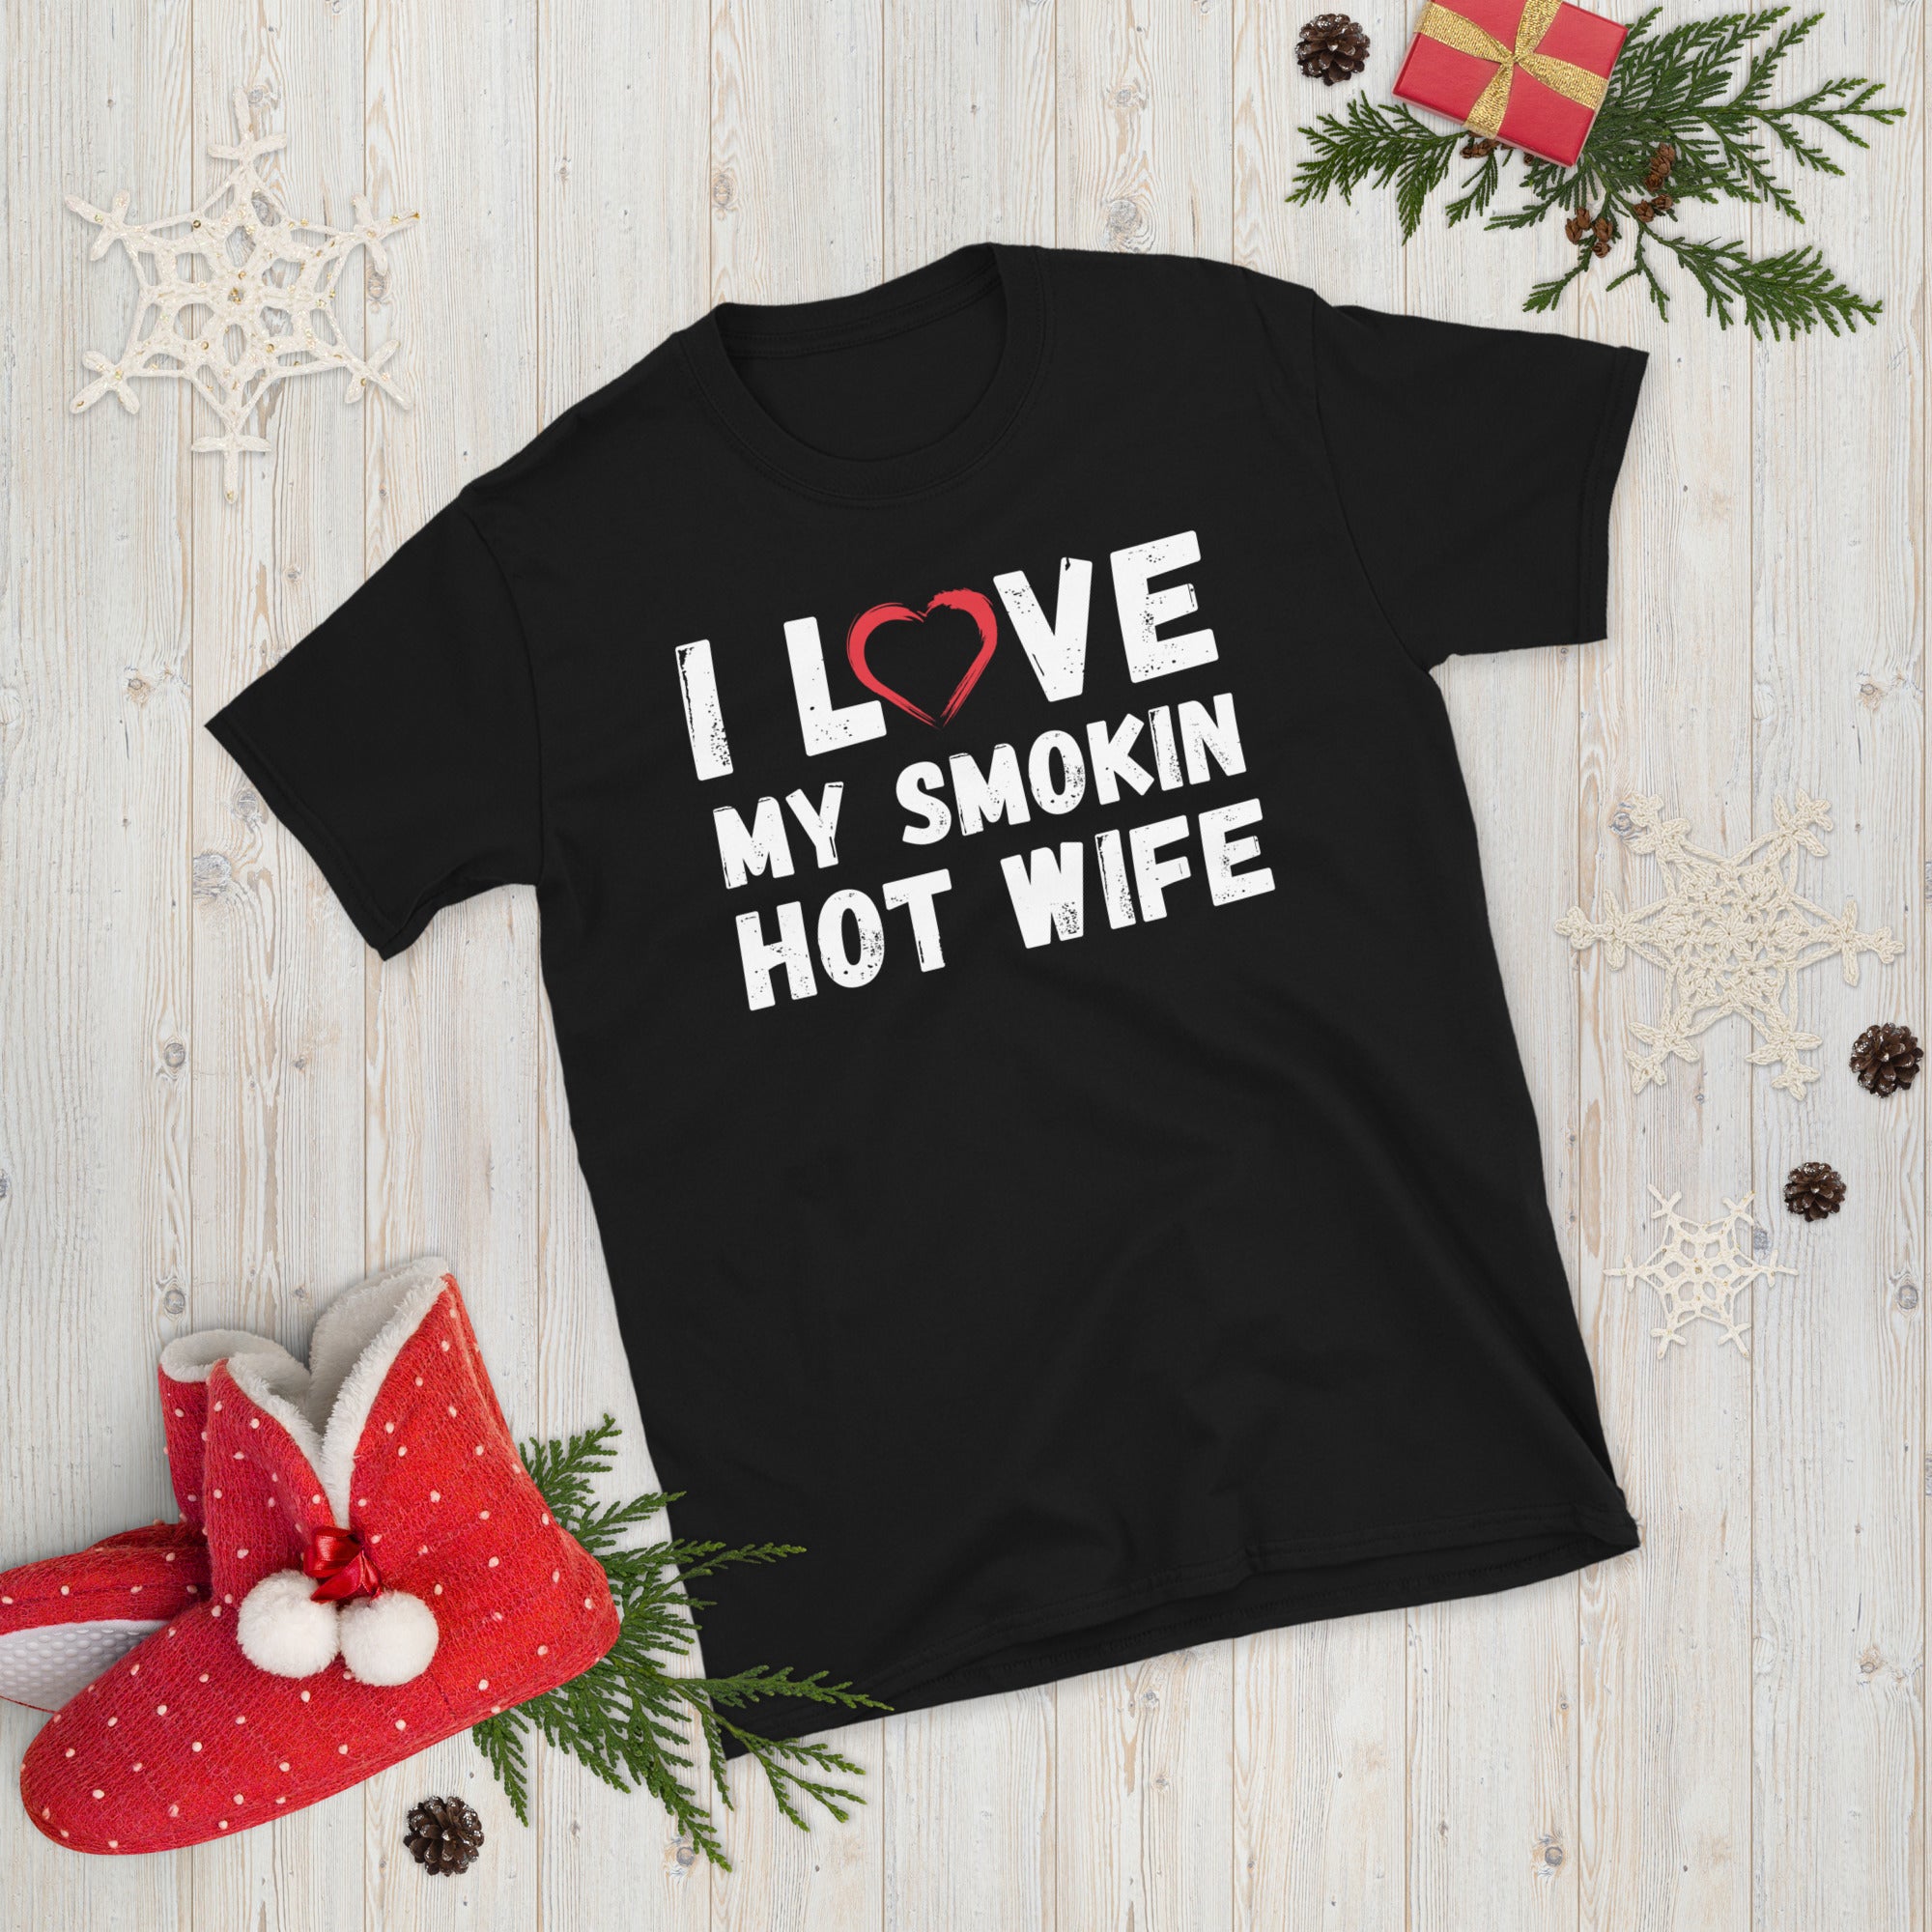 Wedding Gift, Anniversary Shirt, I Love My Smokin Hot Wife, I Love My Wife Shirt, Funny Husband Tshirt, Husband Gift, Fiance Shirt - Madeinsea©